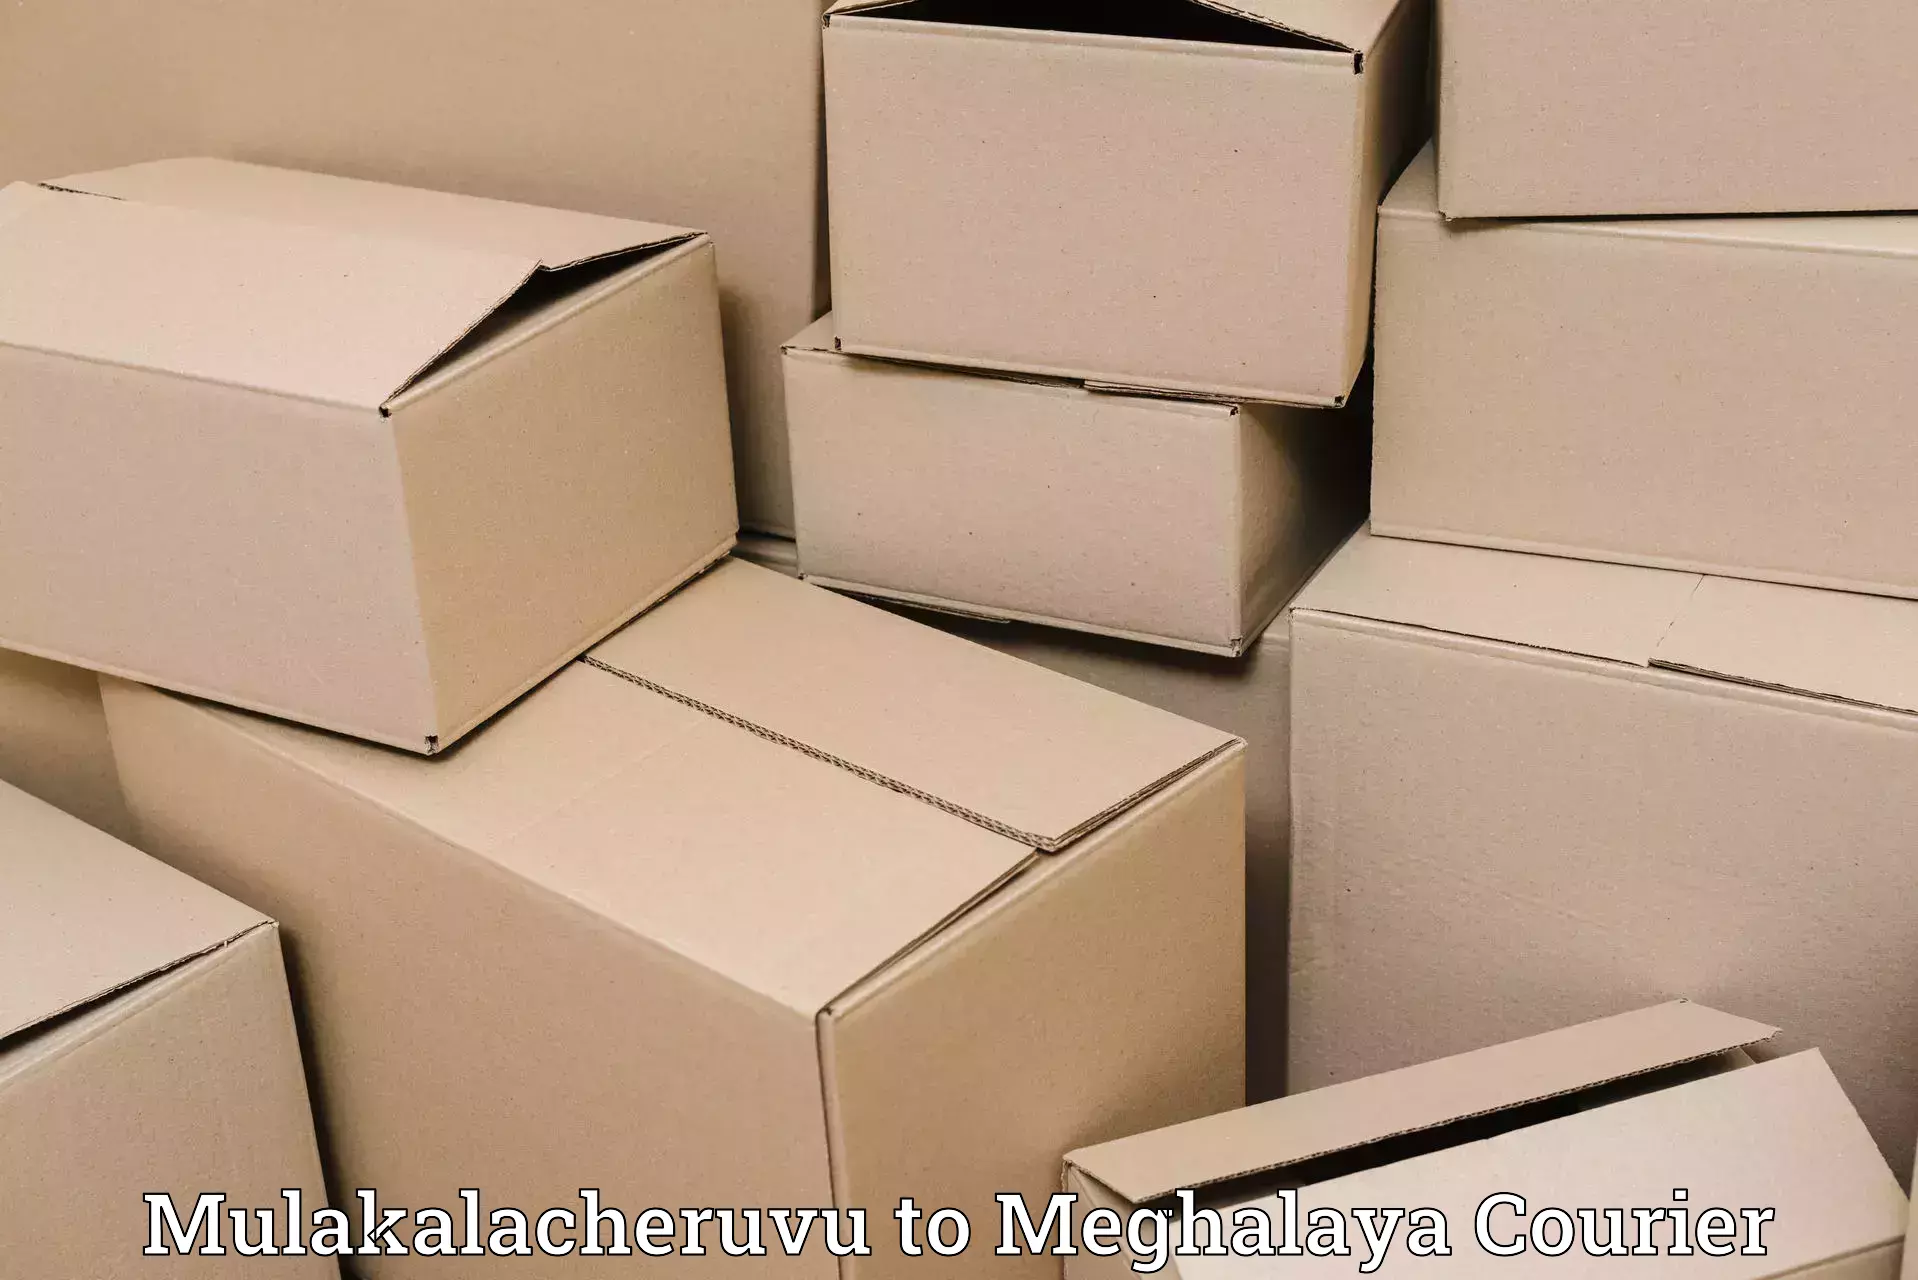 Express delivery capabilities Mulakalacheruvu to Jowai